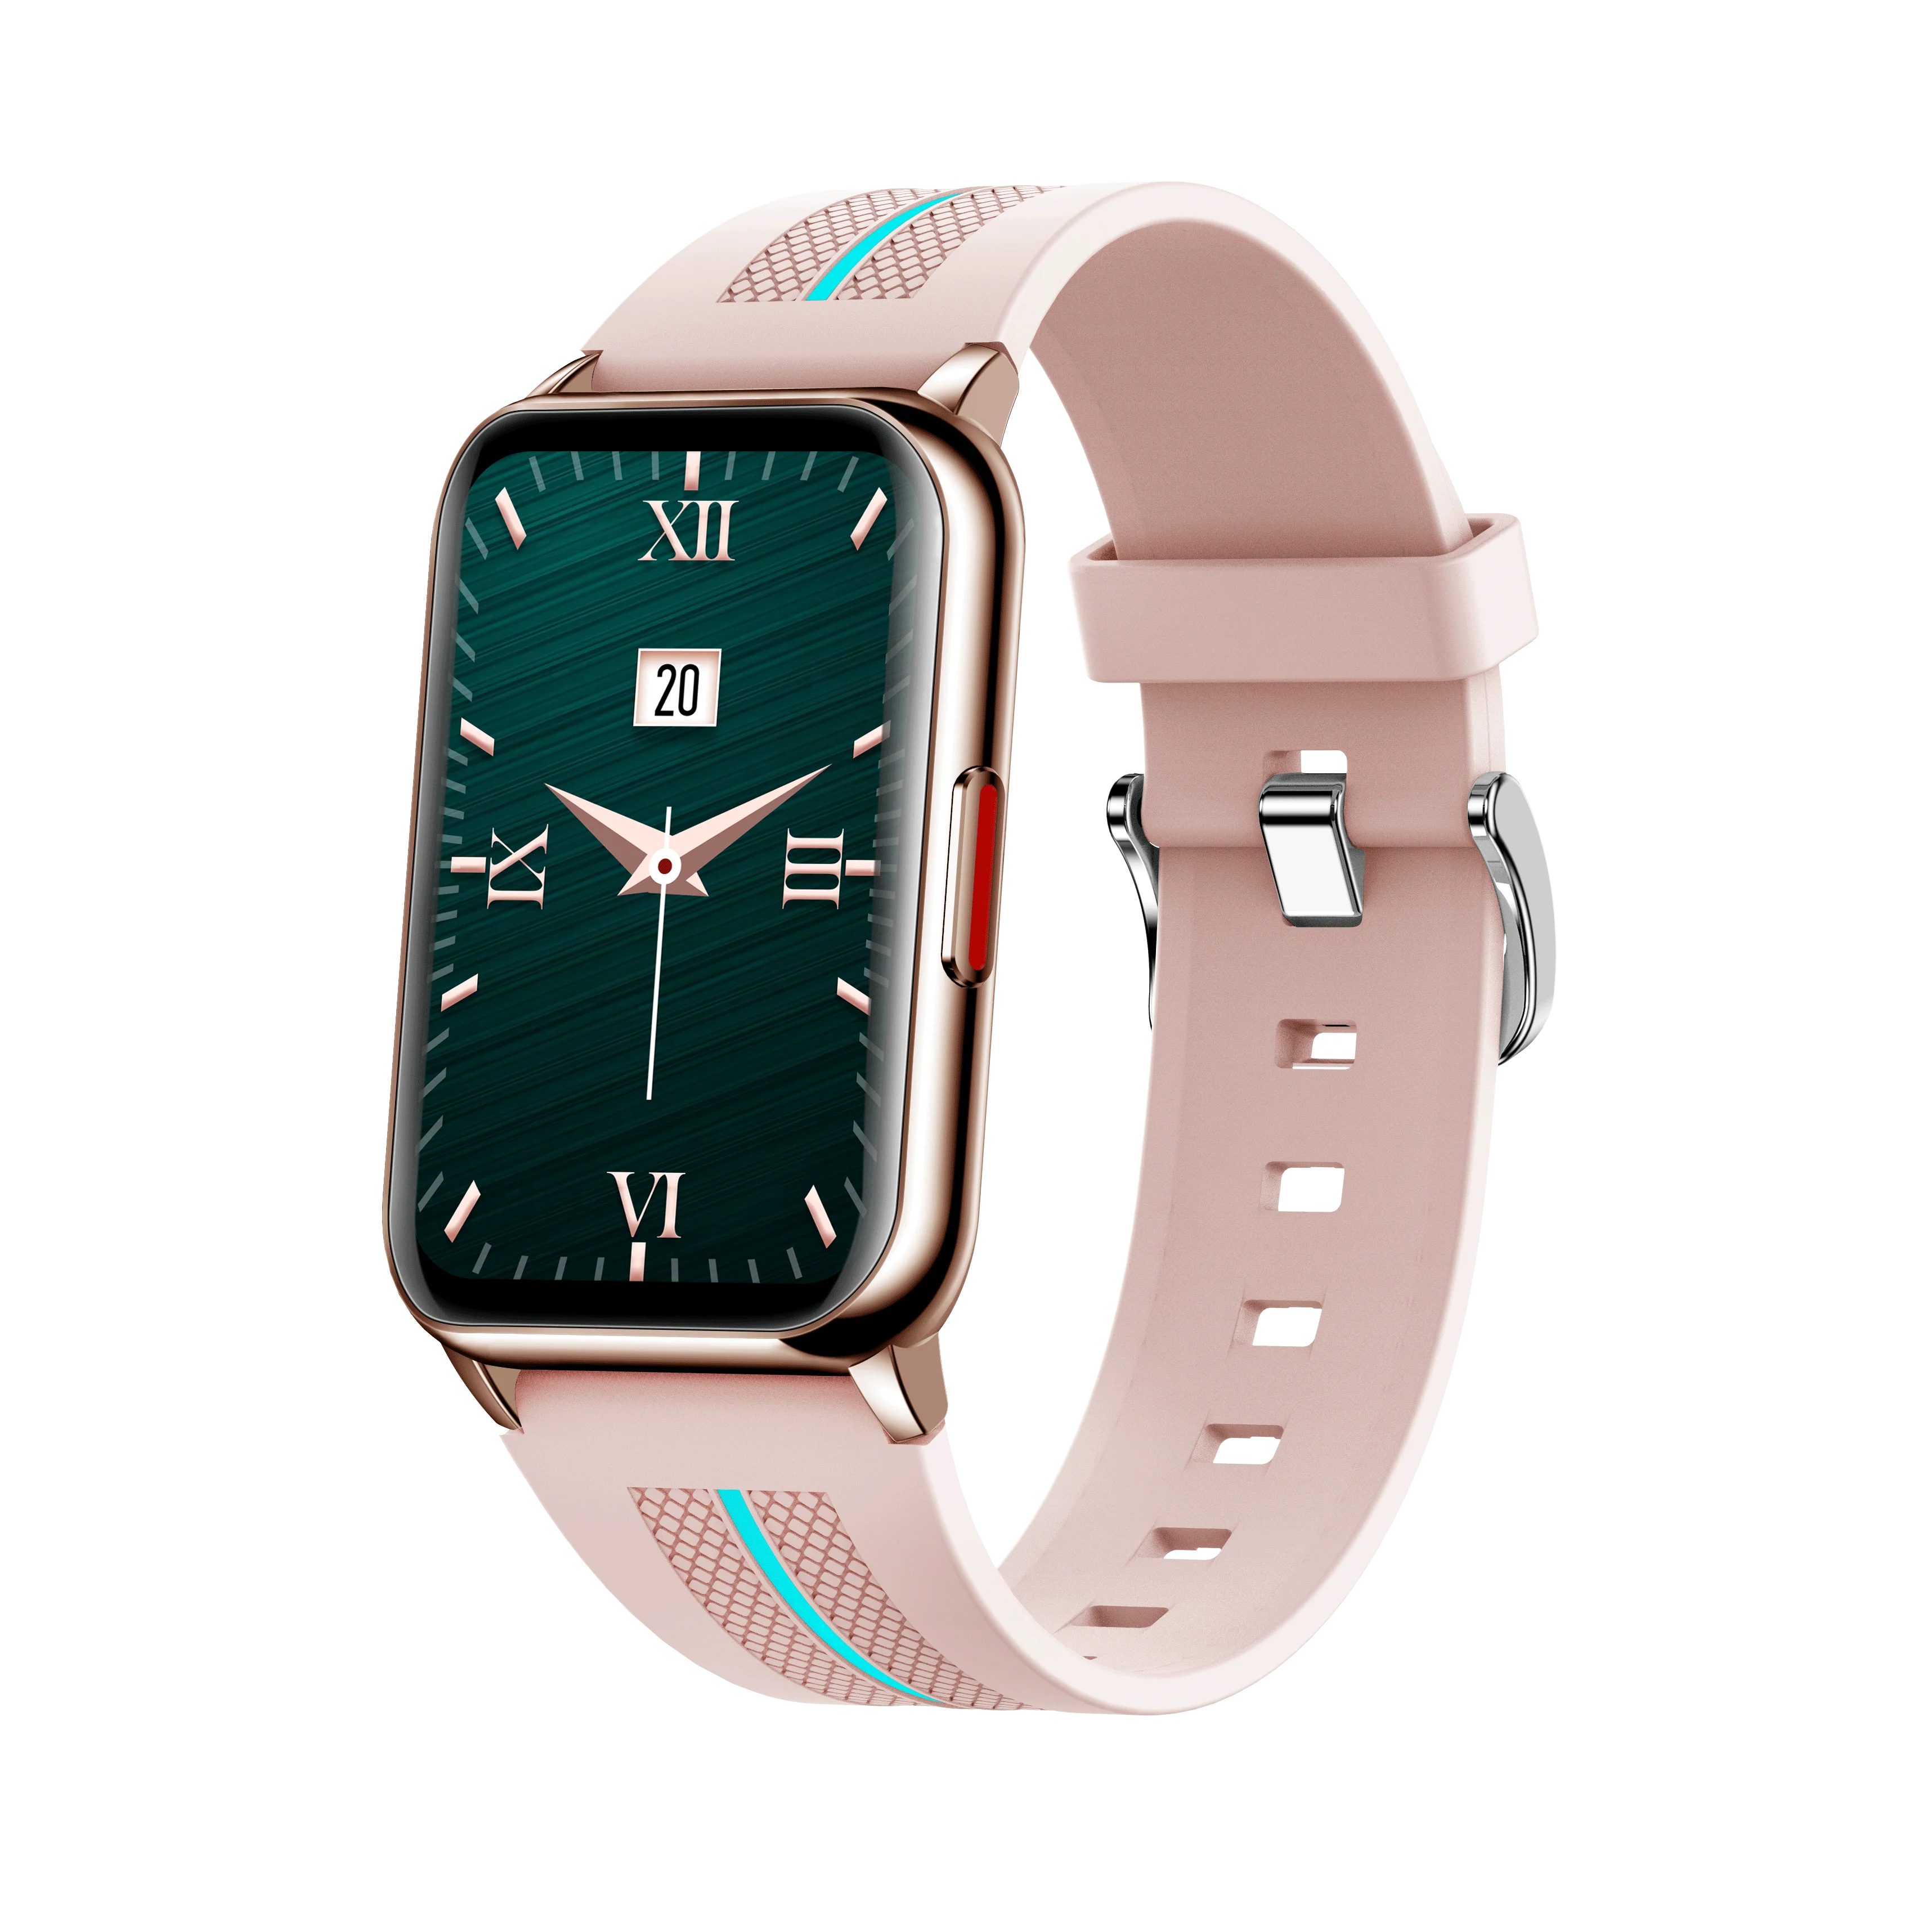 

Hot Sales Smartwatch H76 IP68 Waterproof Watch Online Reloj Smart Watch h76 Health Monitoring Smartwatch